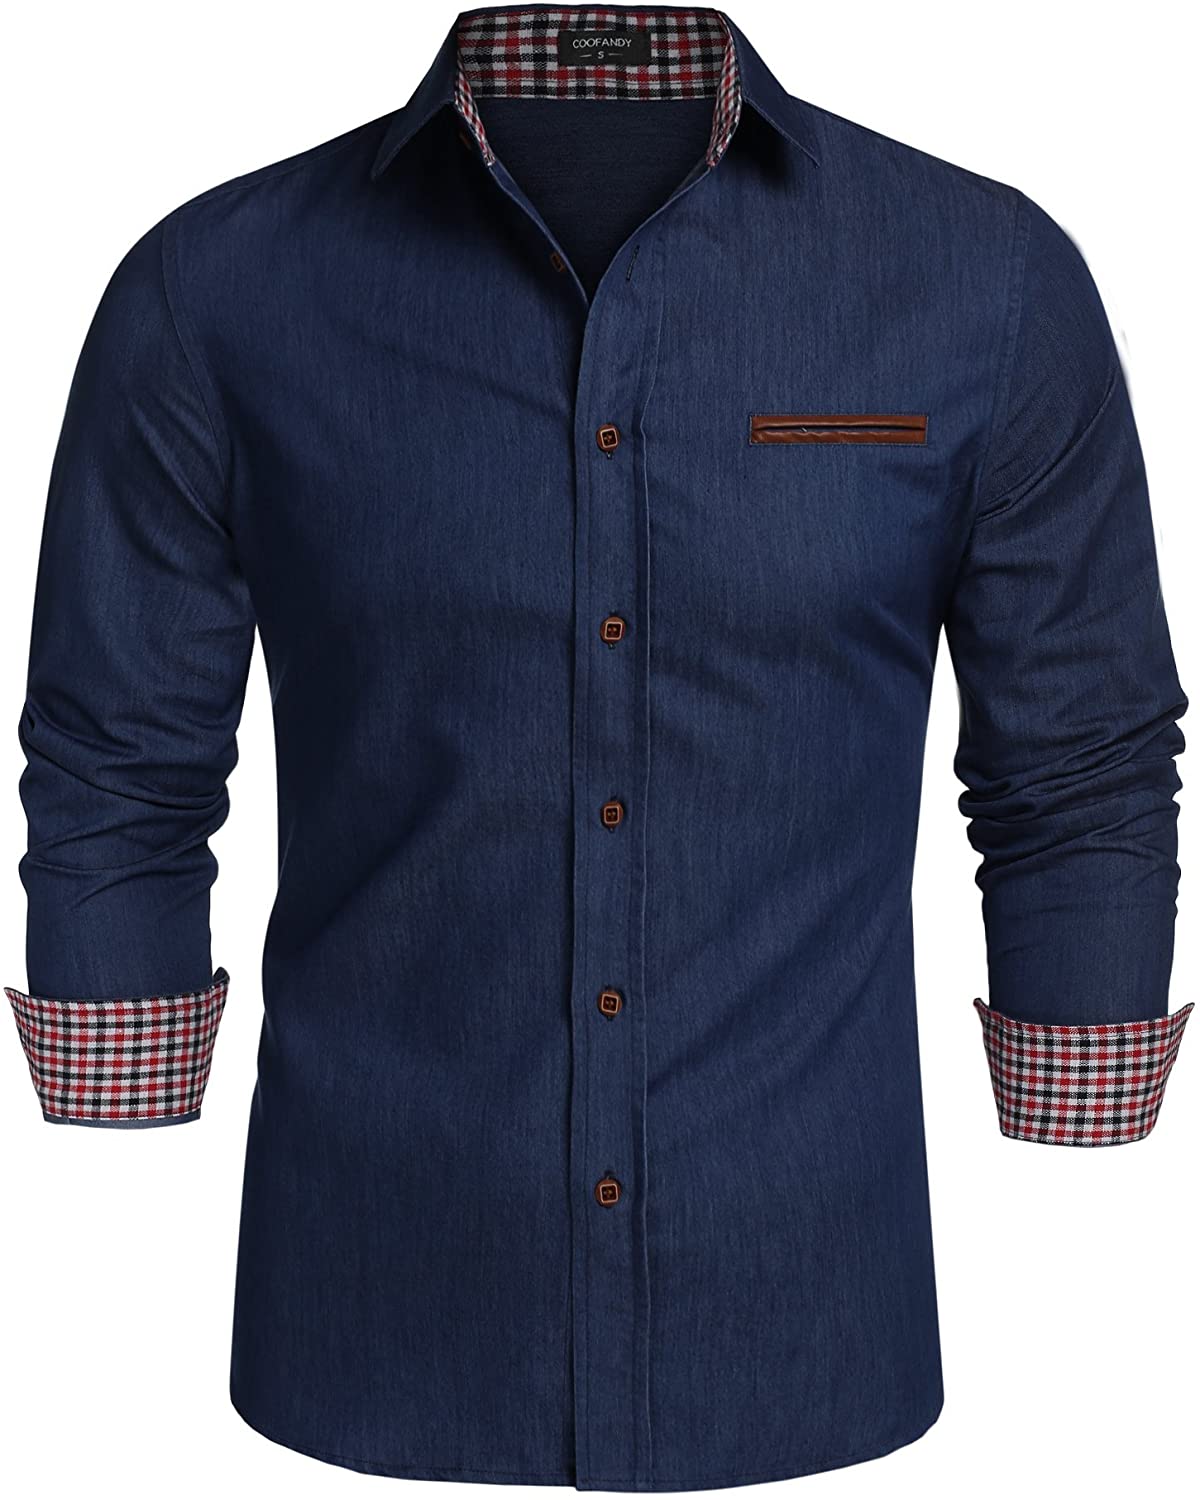 COOFANDY Men's Casual Dress Shirt Button Down Shirts Long-Sleeve Denim ...